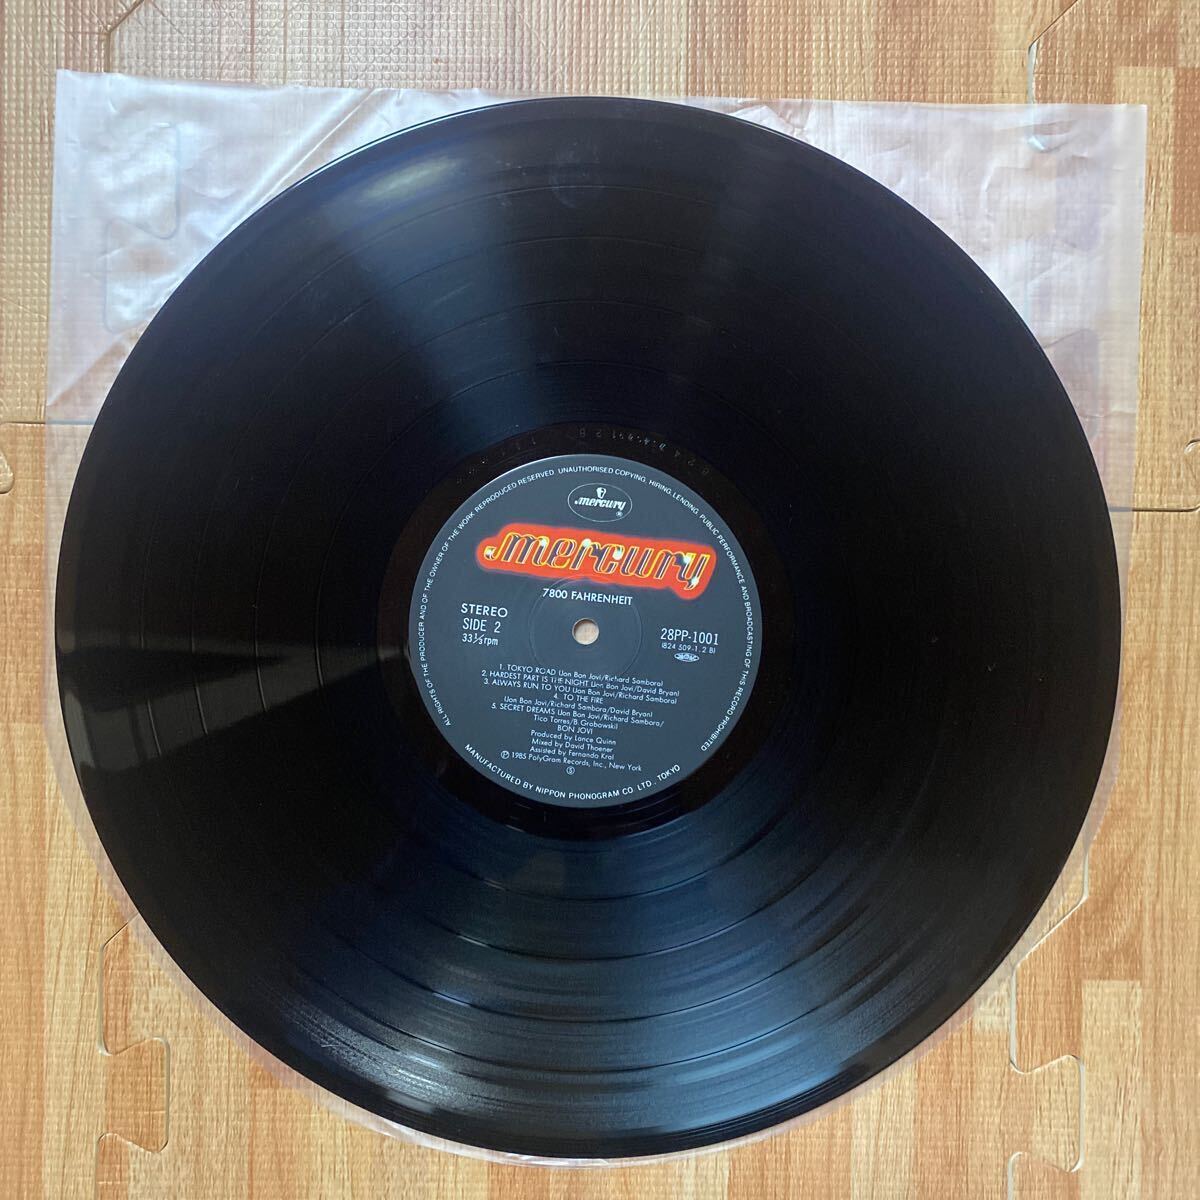 Bon Jovi ボン・ジョヴィ 7800 Fahrenheit レコード LP 帯付き OBI 28PP-1001_画像8